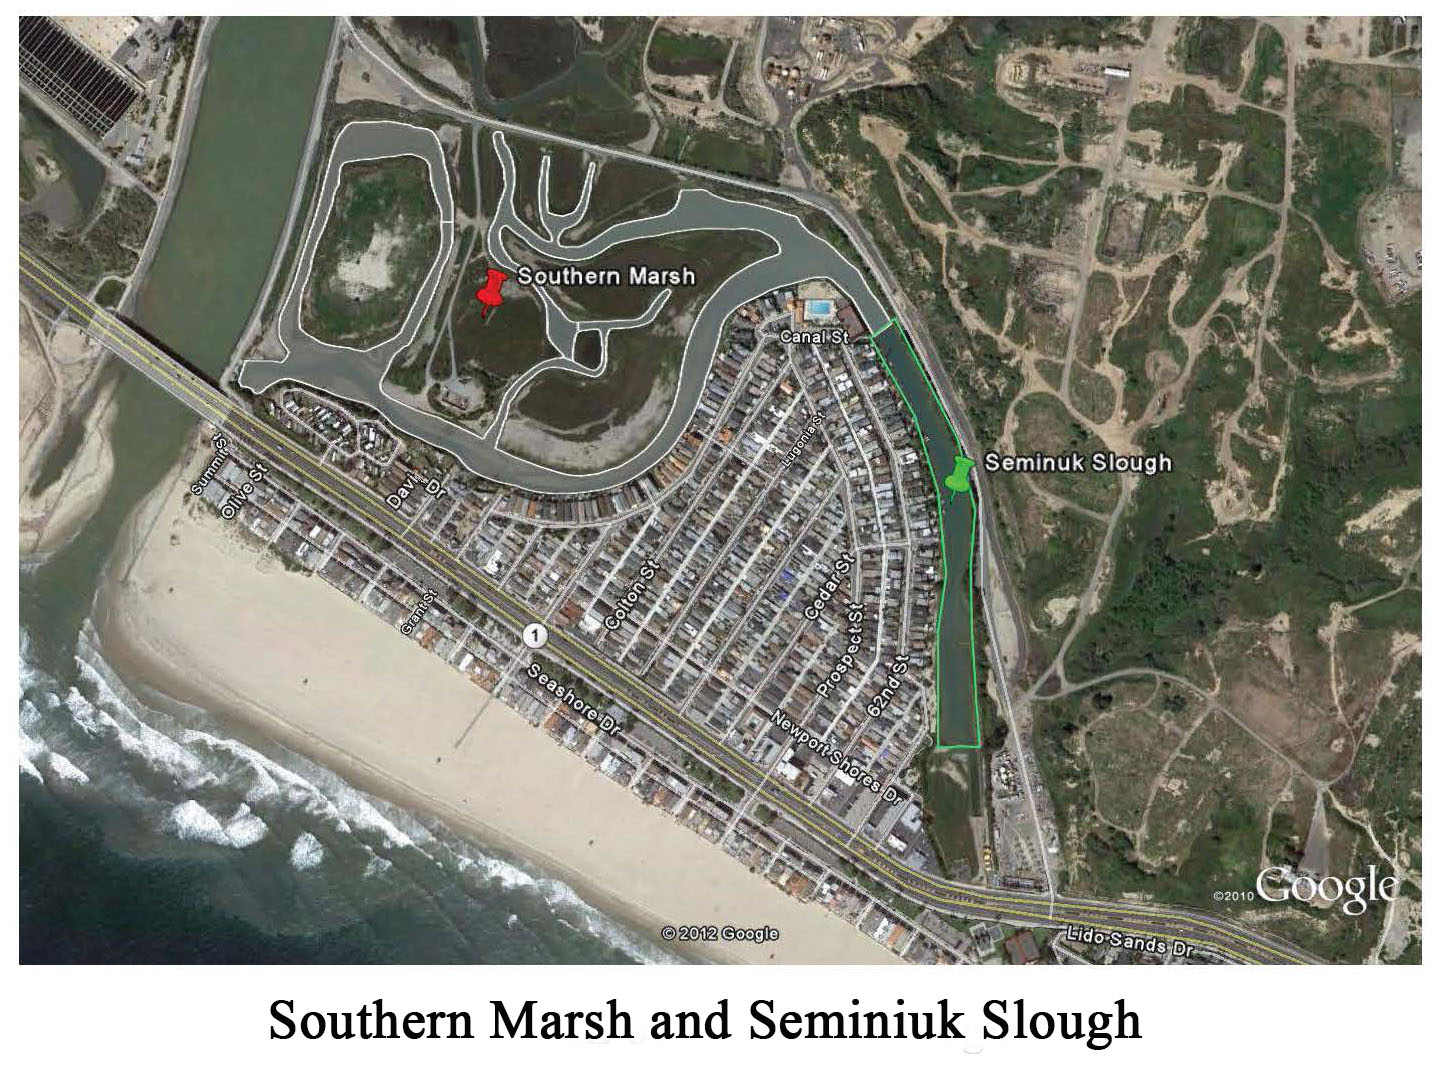 Southern Marsh & Seminiuk Slough